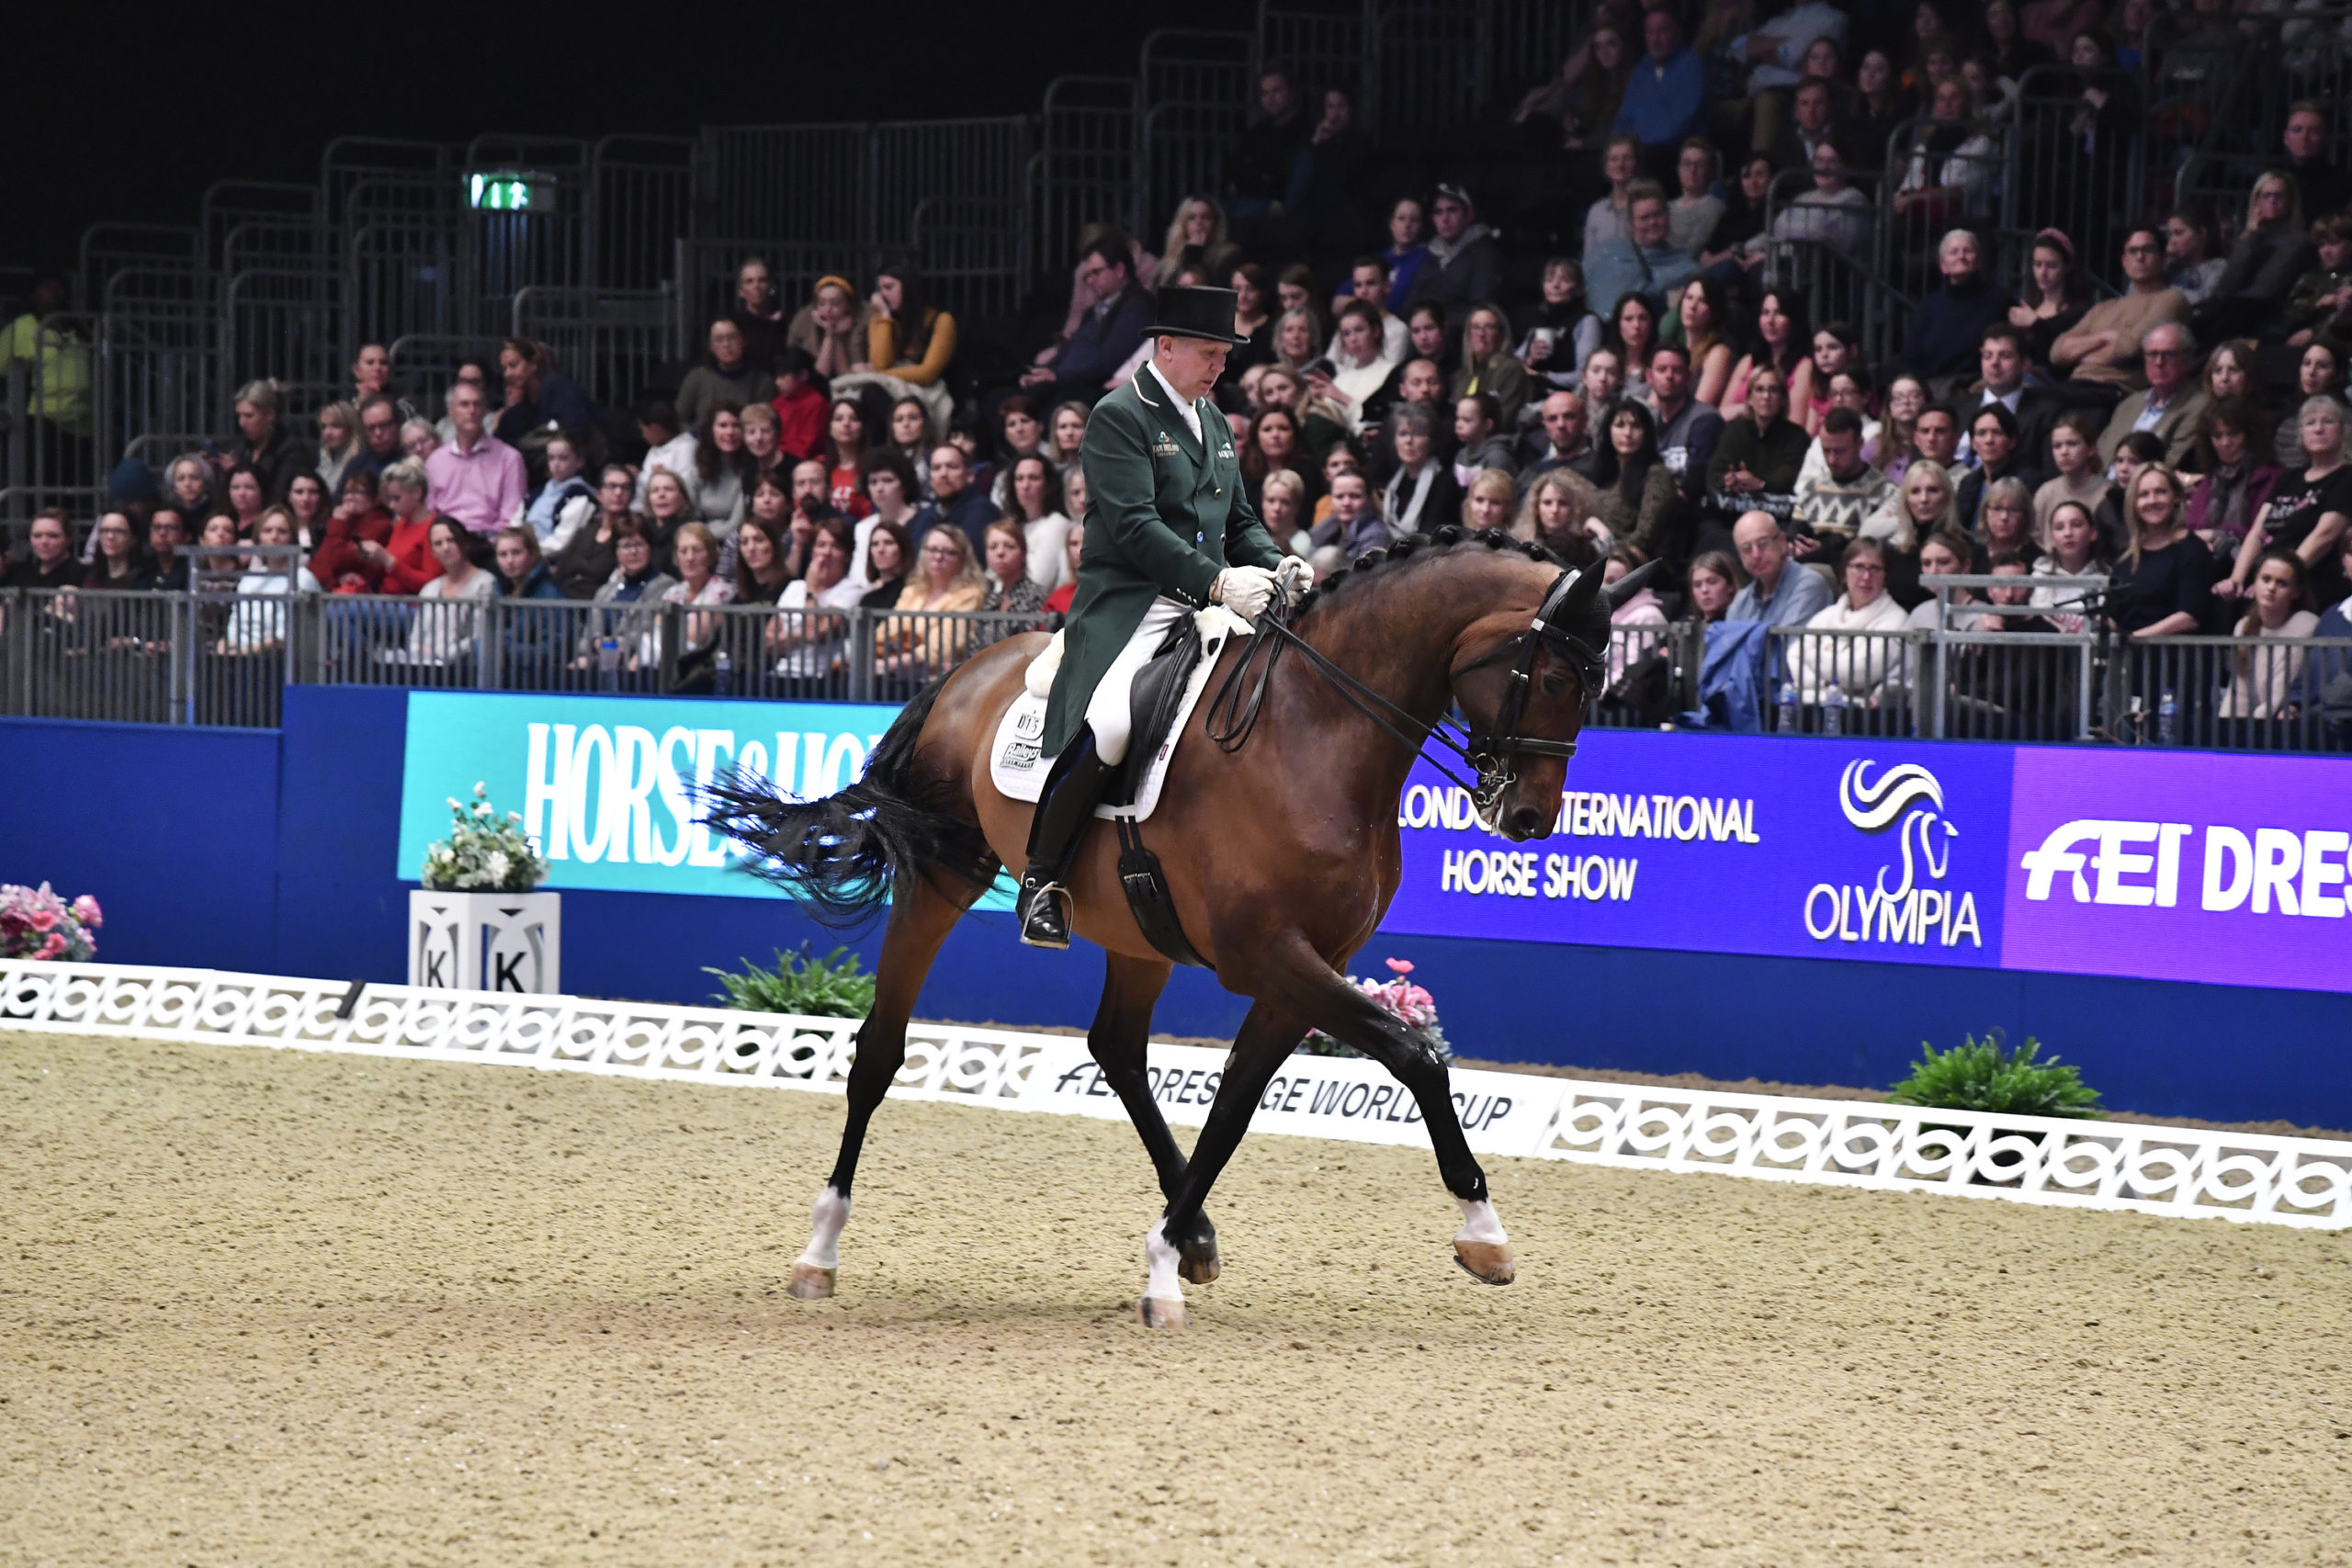 DANE RAWLINS: ‘Enjoy the journey’ - Horse Sport Ireland